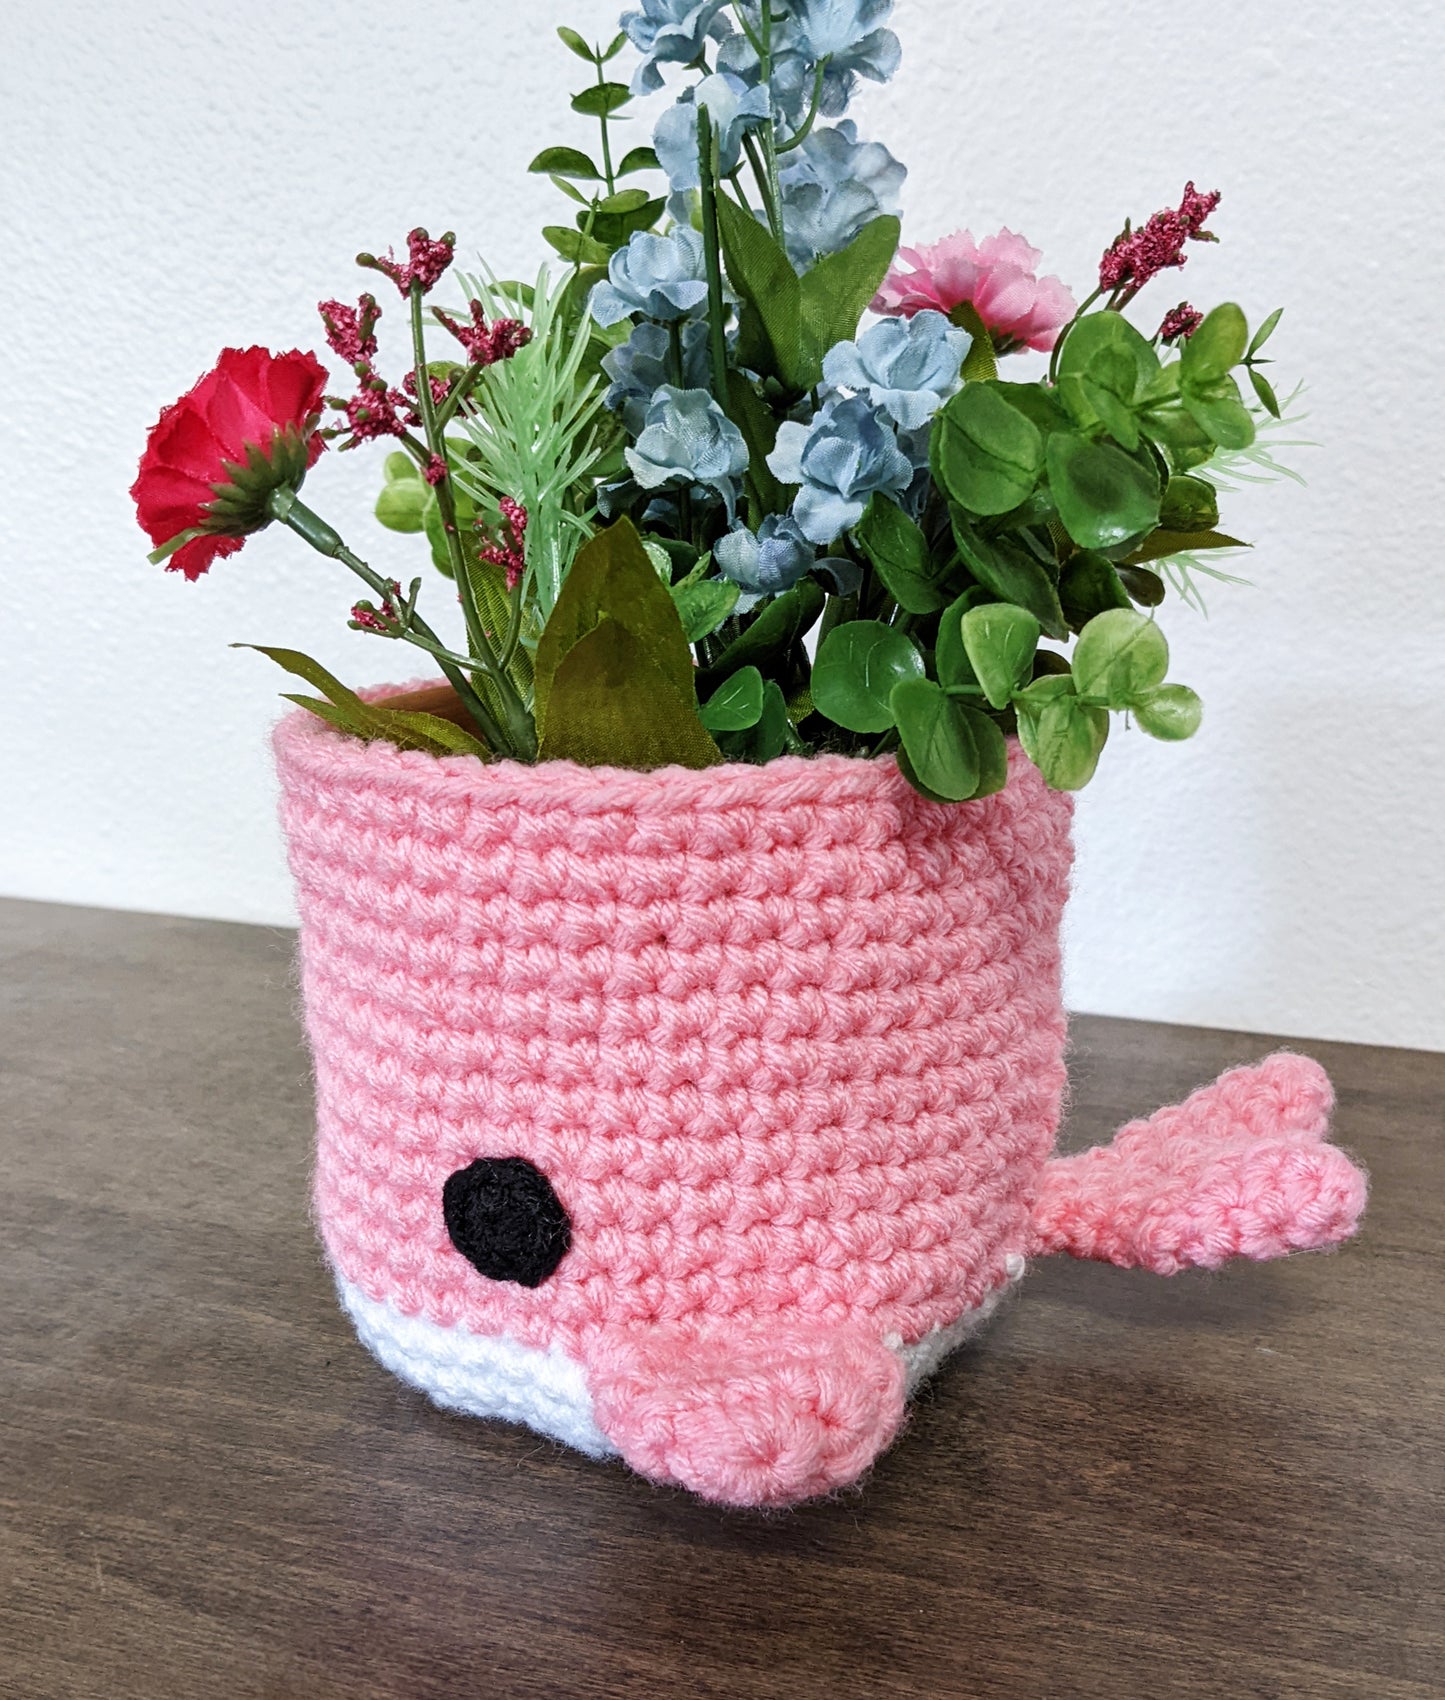 Crochet Pattern: Whale Planter